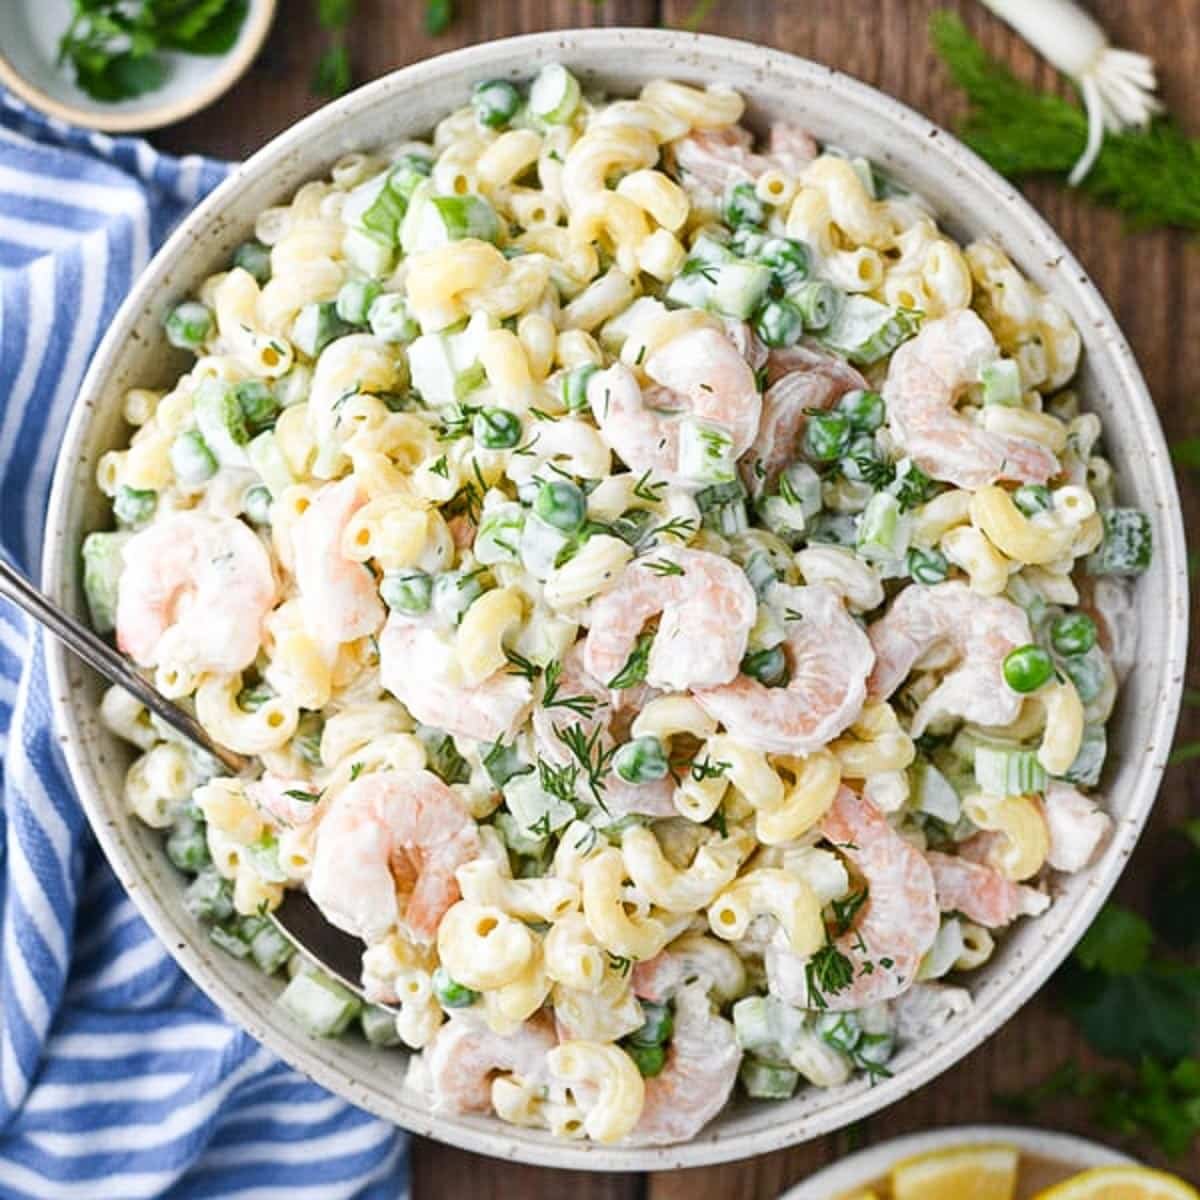 https://www.theseasonedmom.com/wp-content/uploads/2021/04/Shrimp-Pasta-Salad-Square.jpg